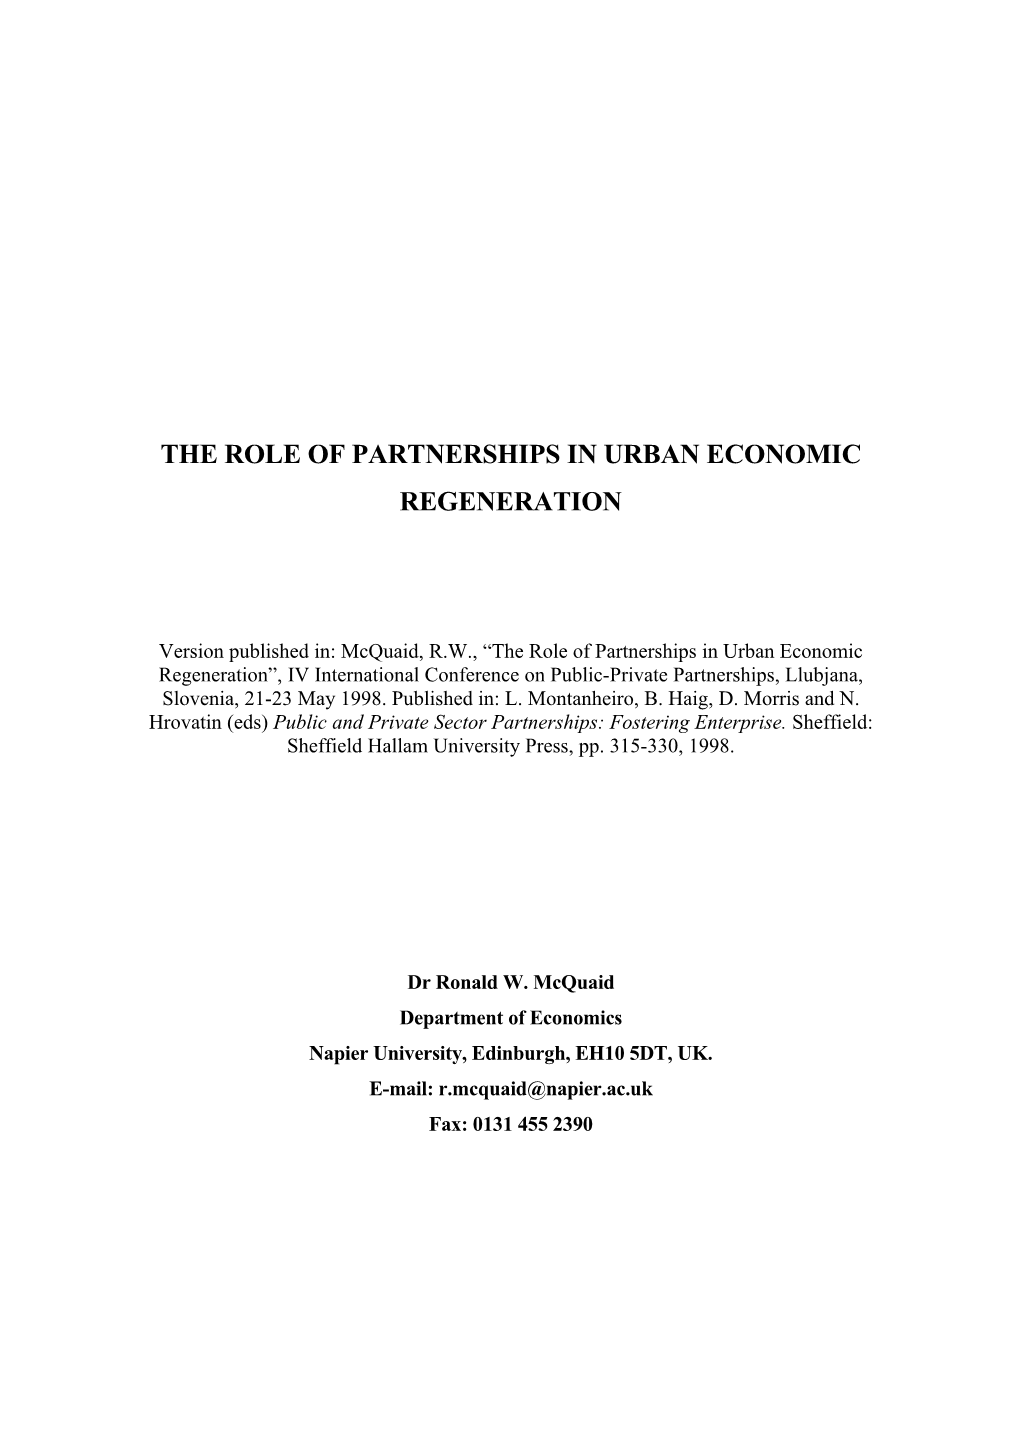 Partnerships and Urban Economic Development